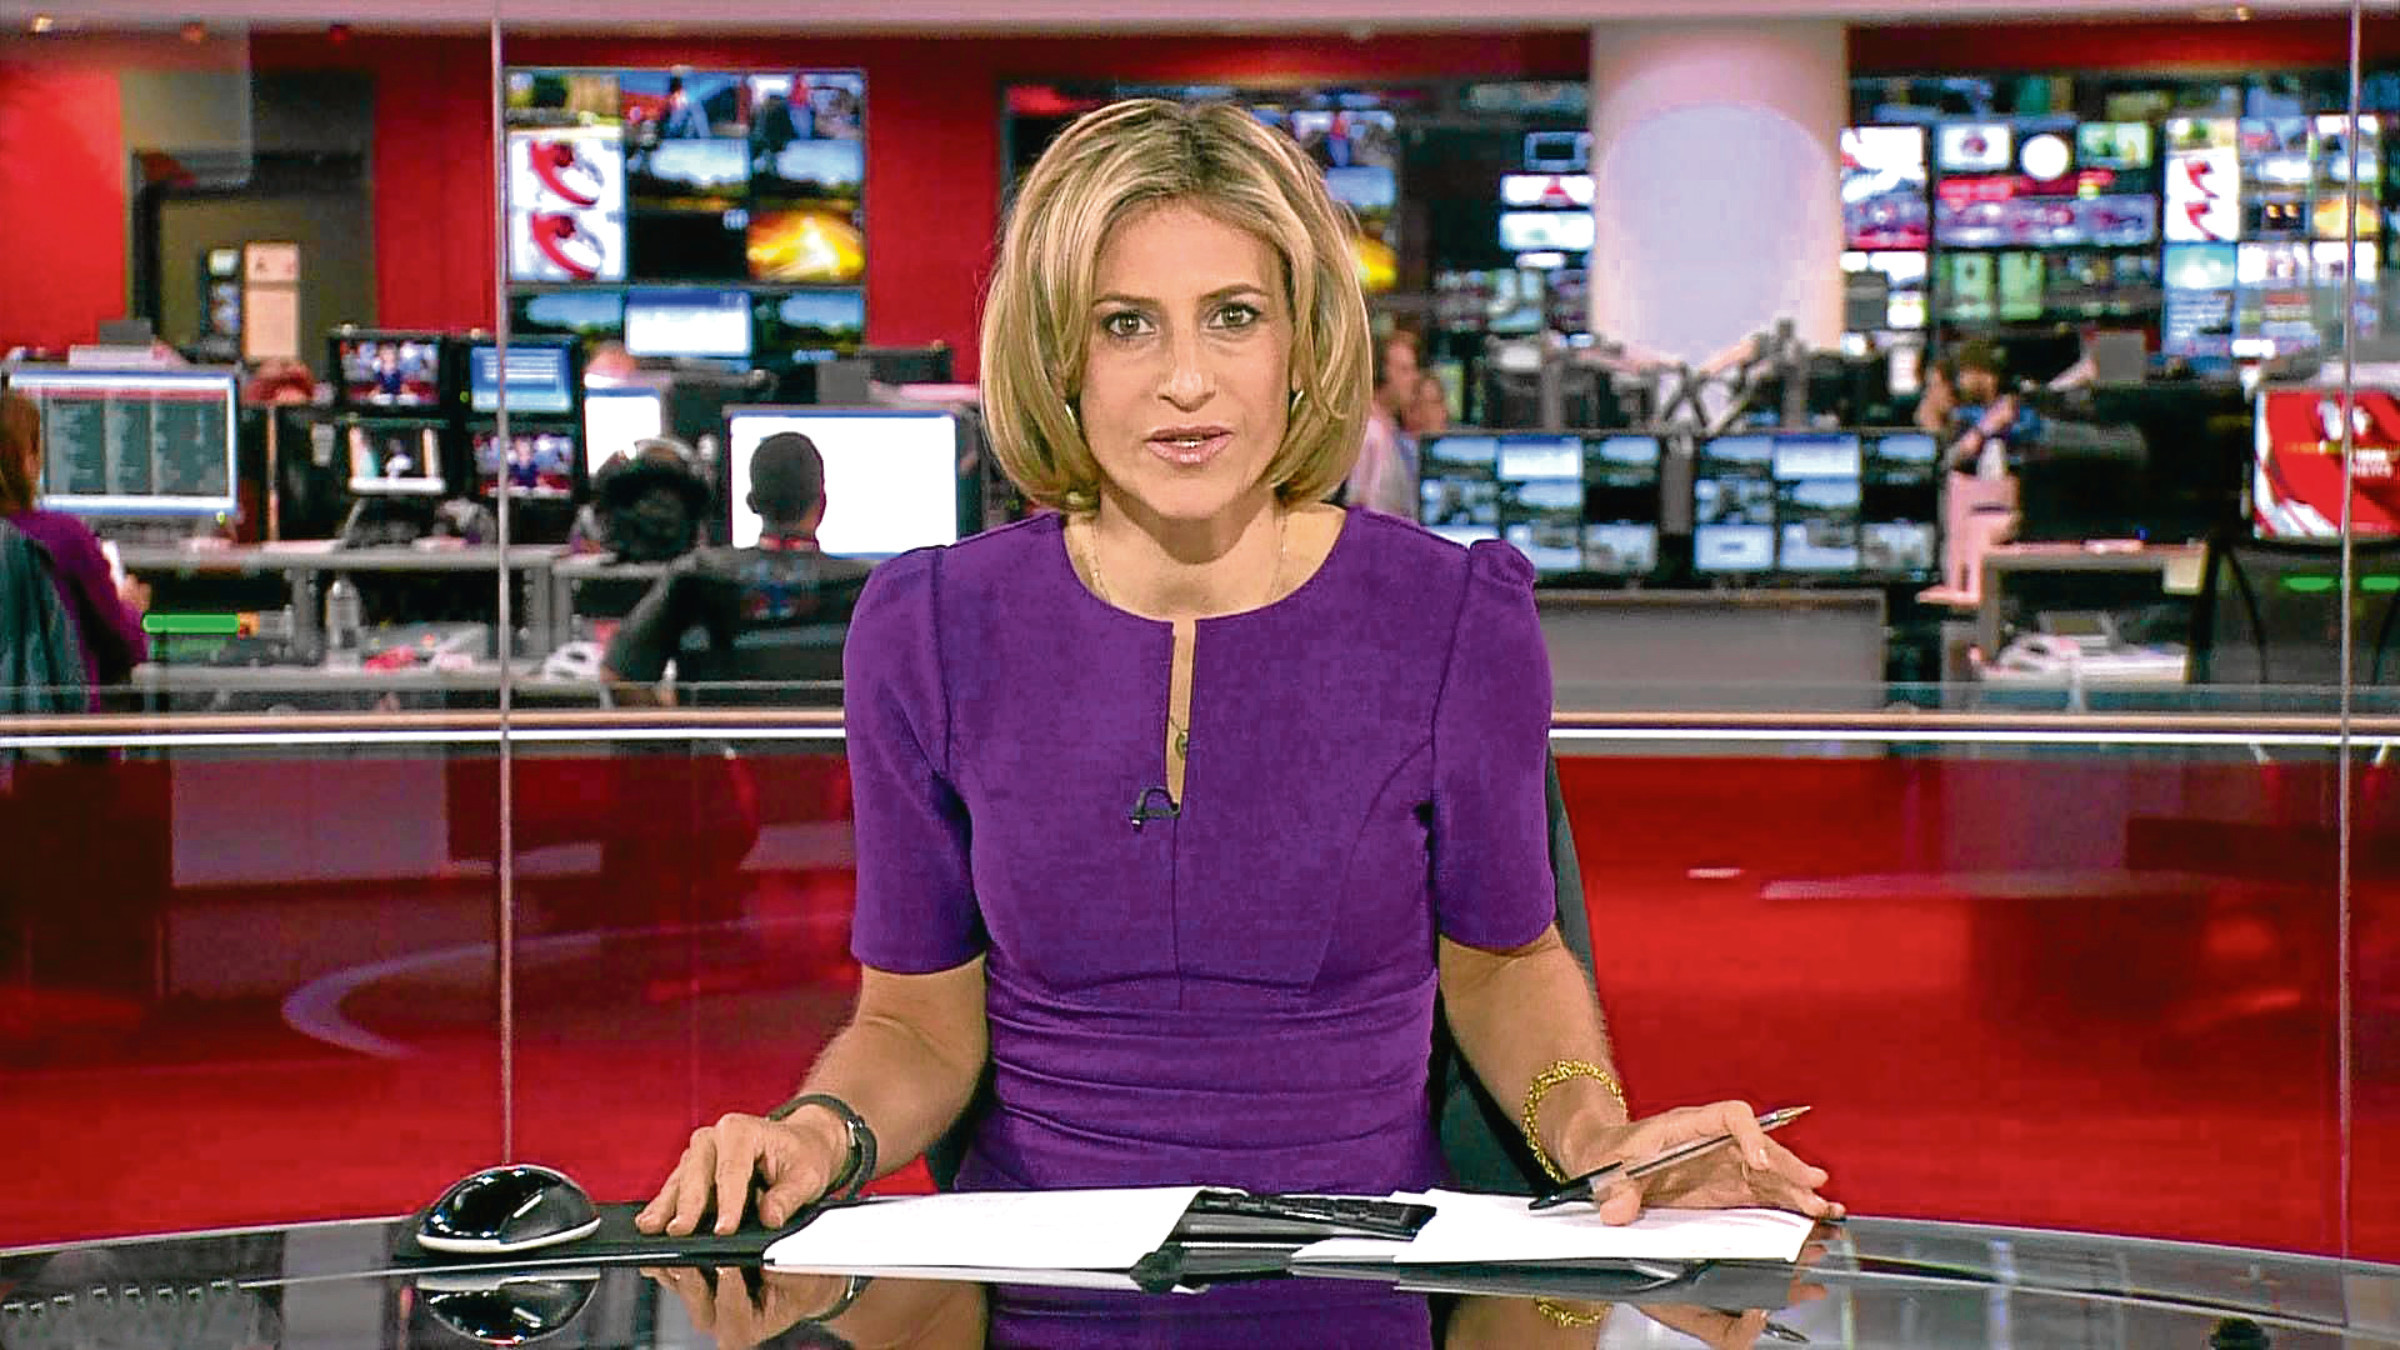 BBC presenter Emily Maitlis